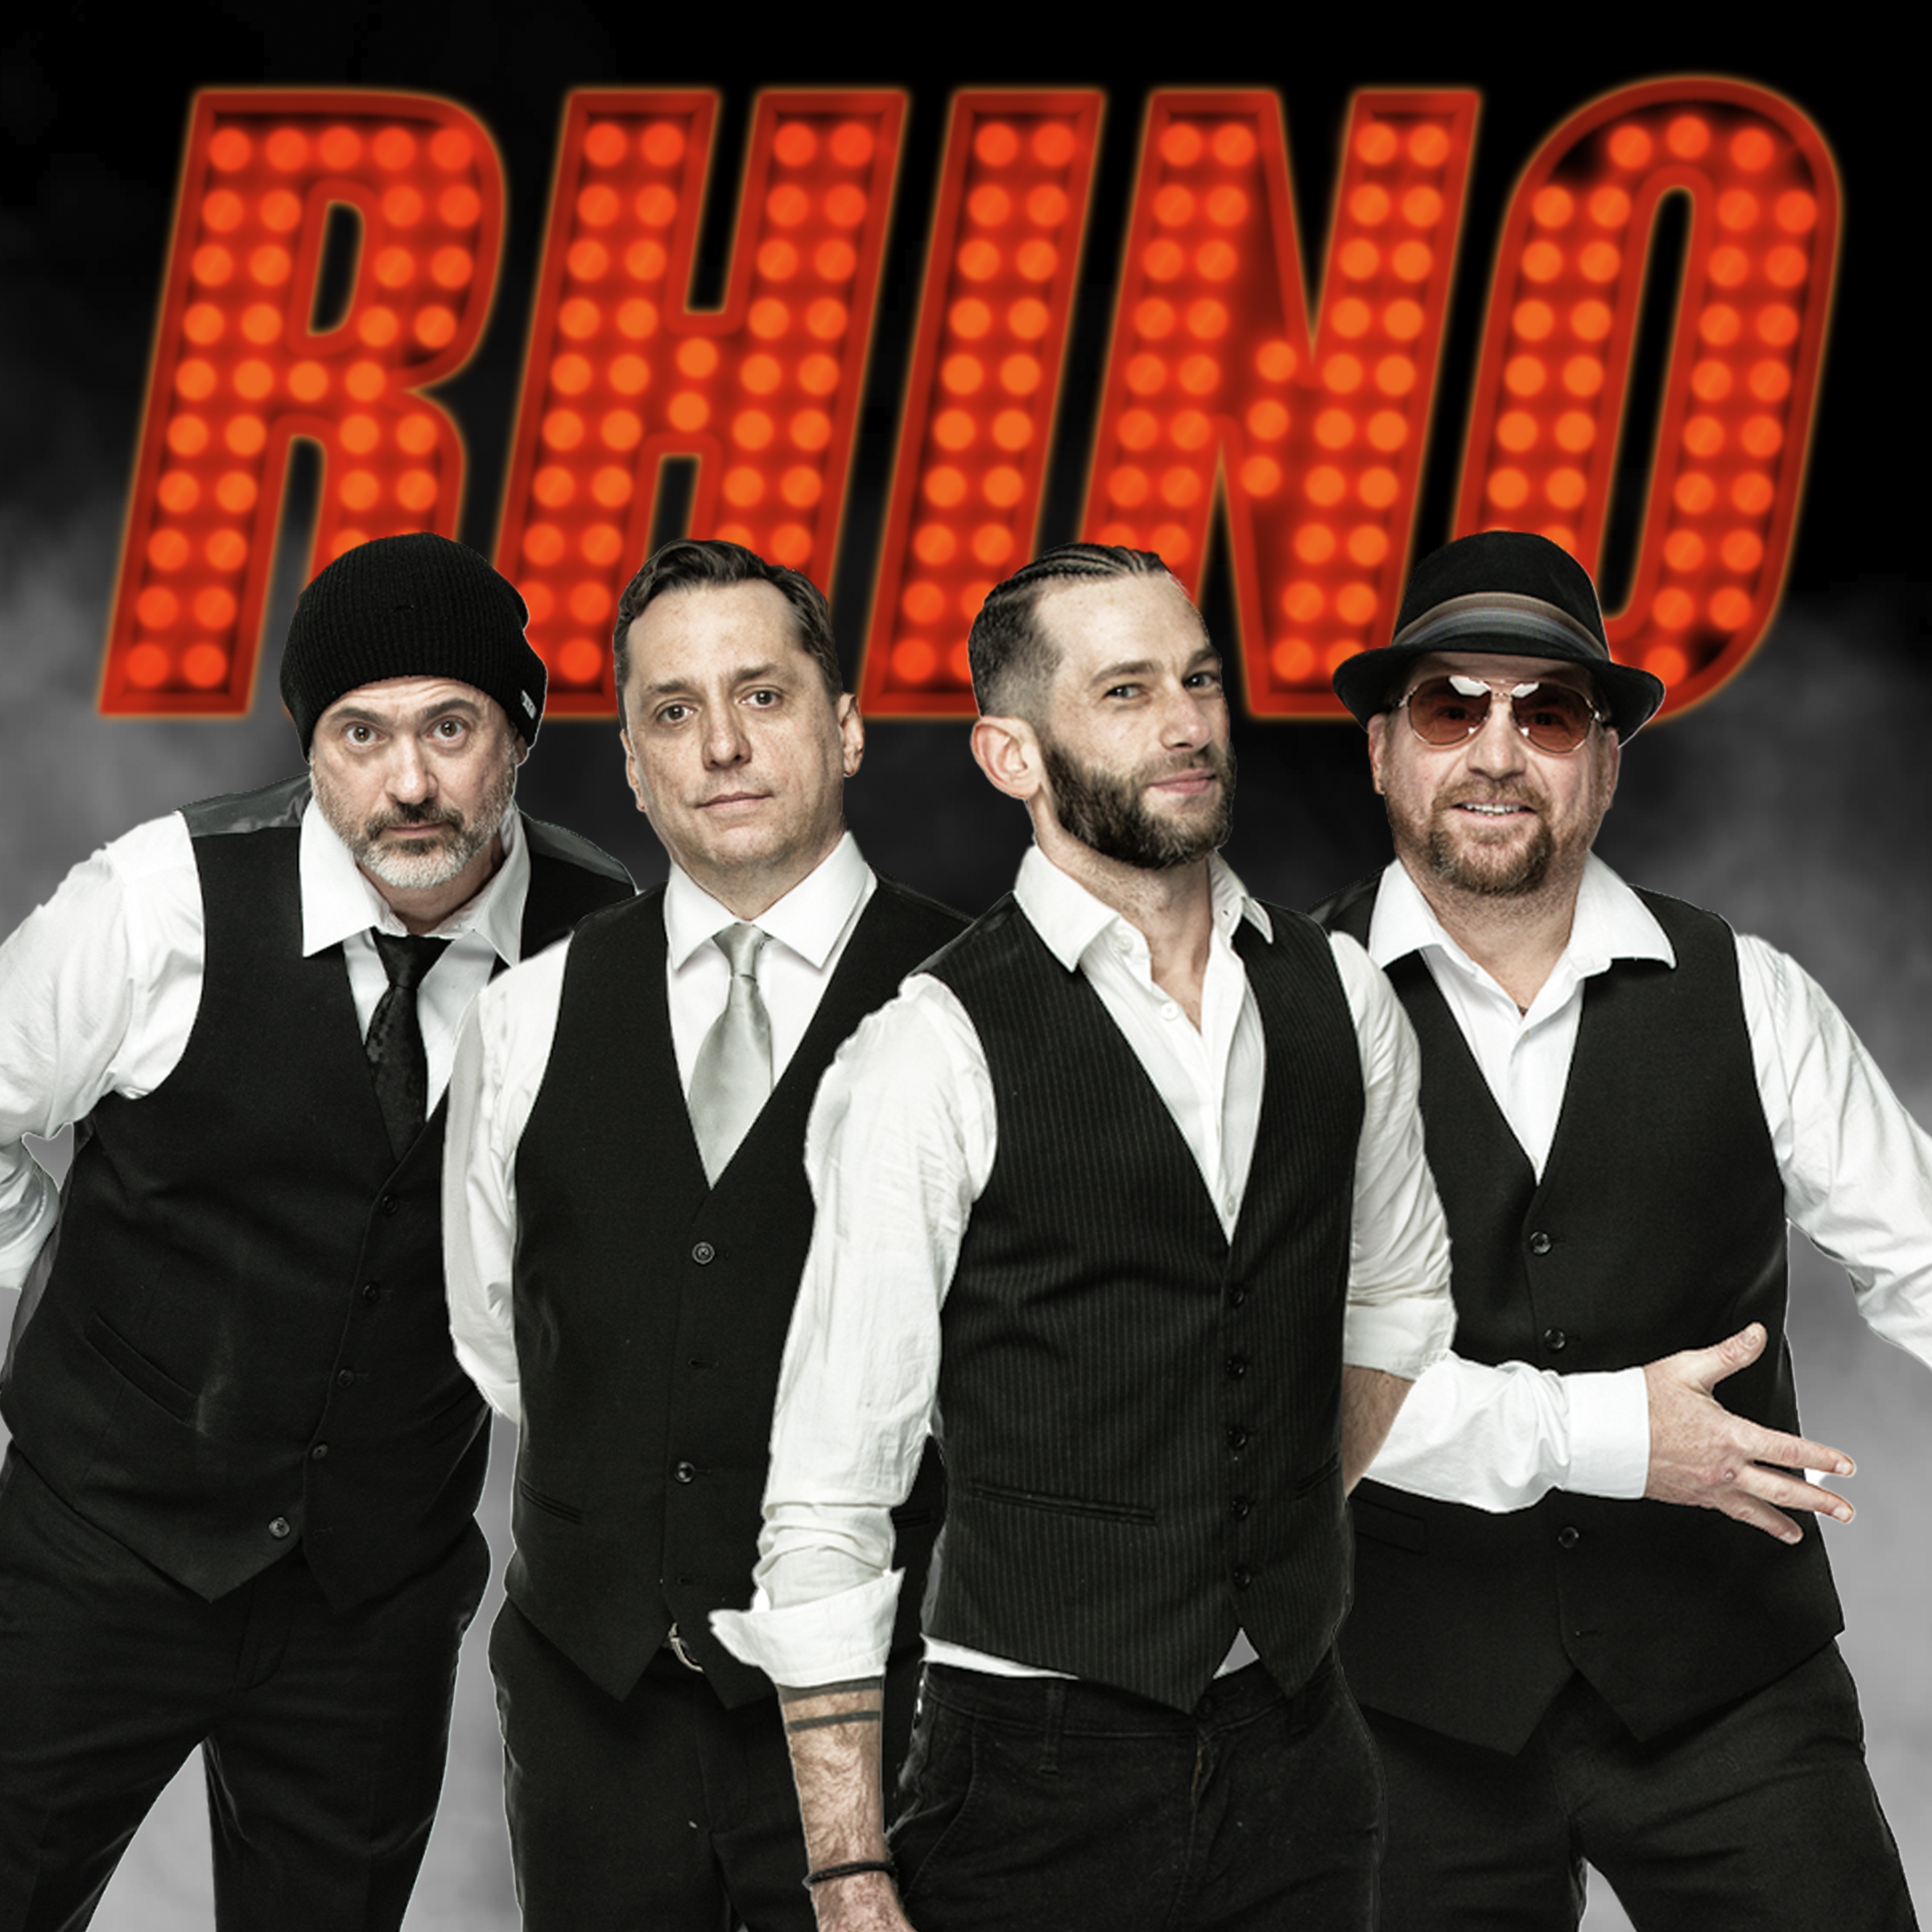 Rhino Band photo with logo